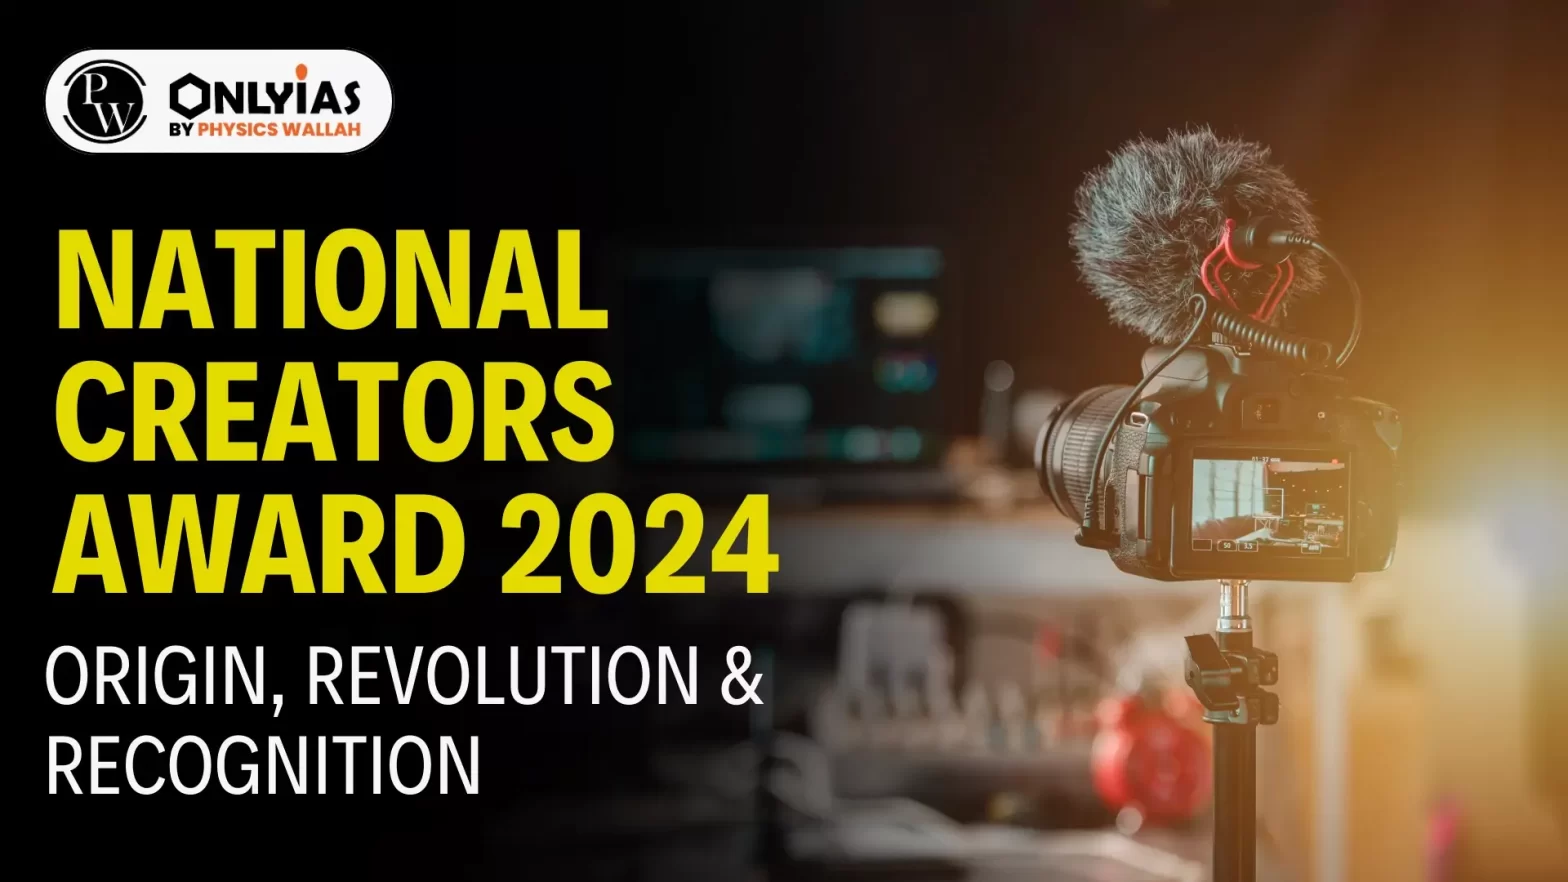 National Creators Award 2024: Origin, Revolution & Recognition